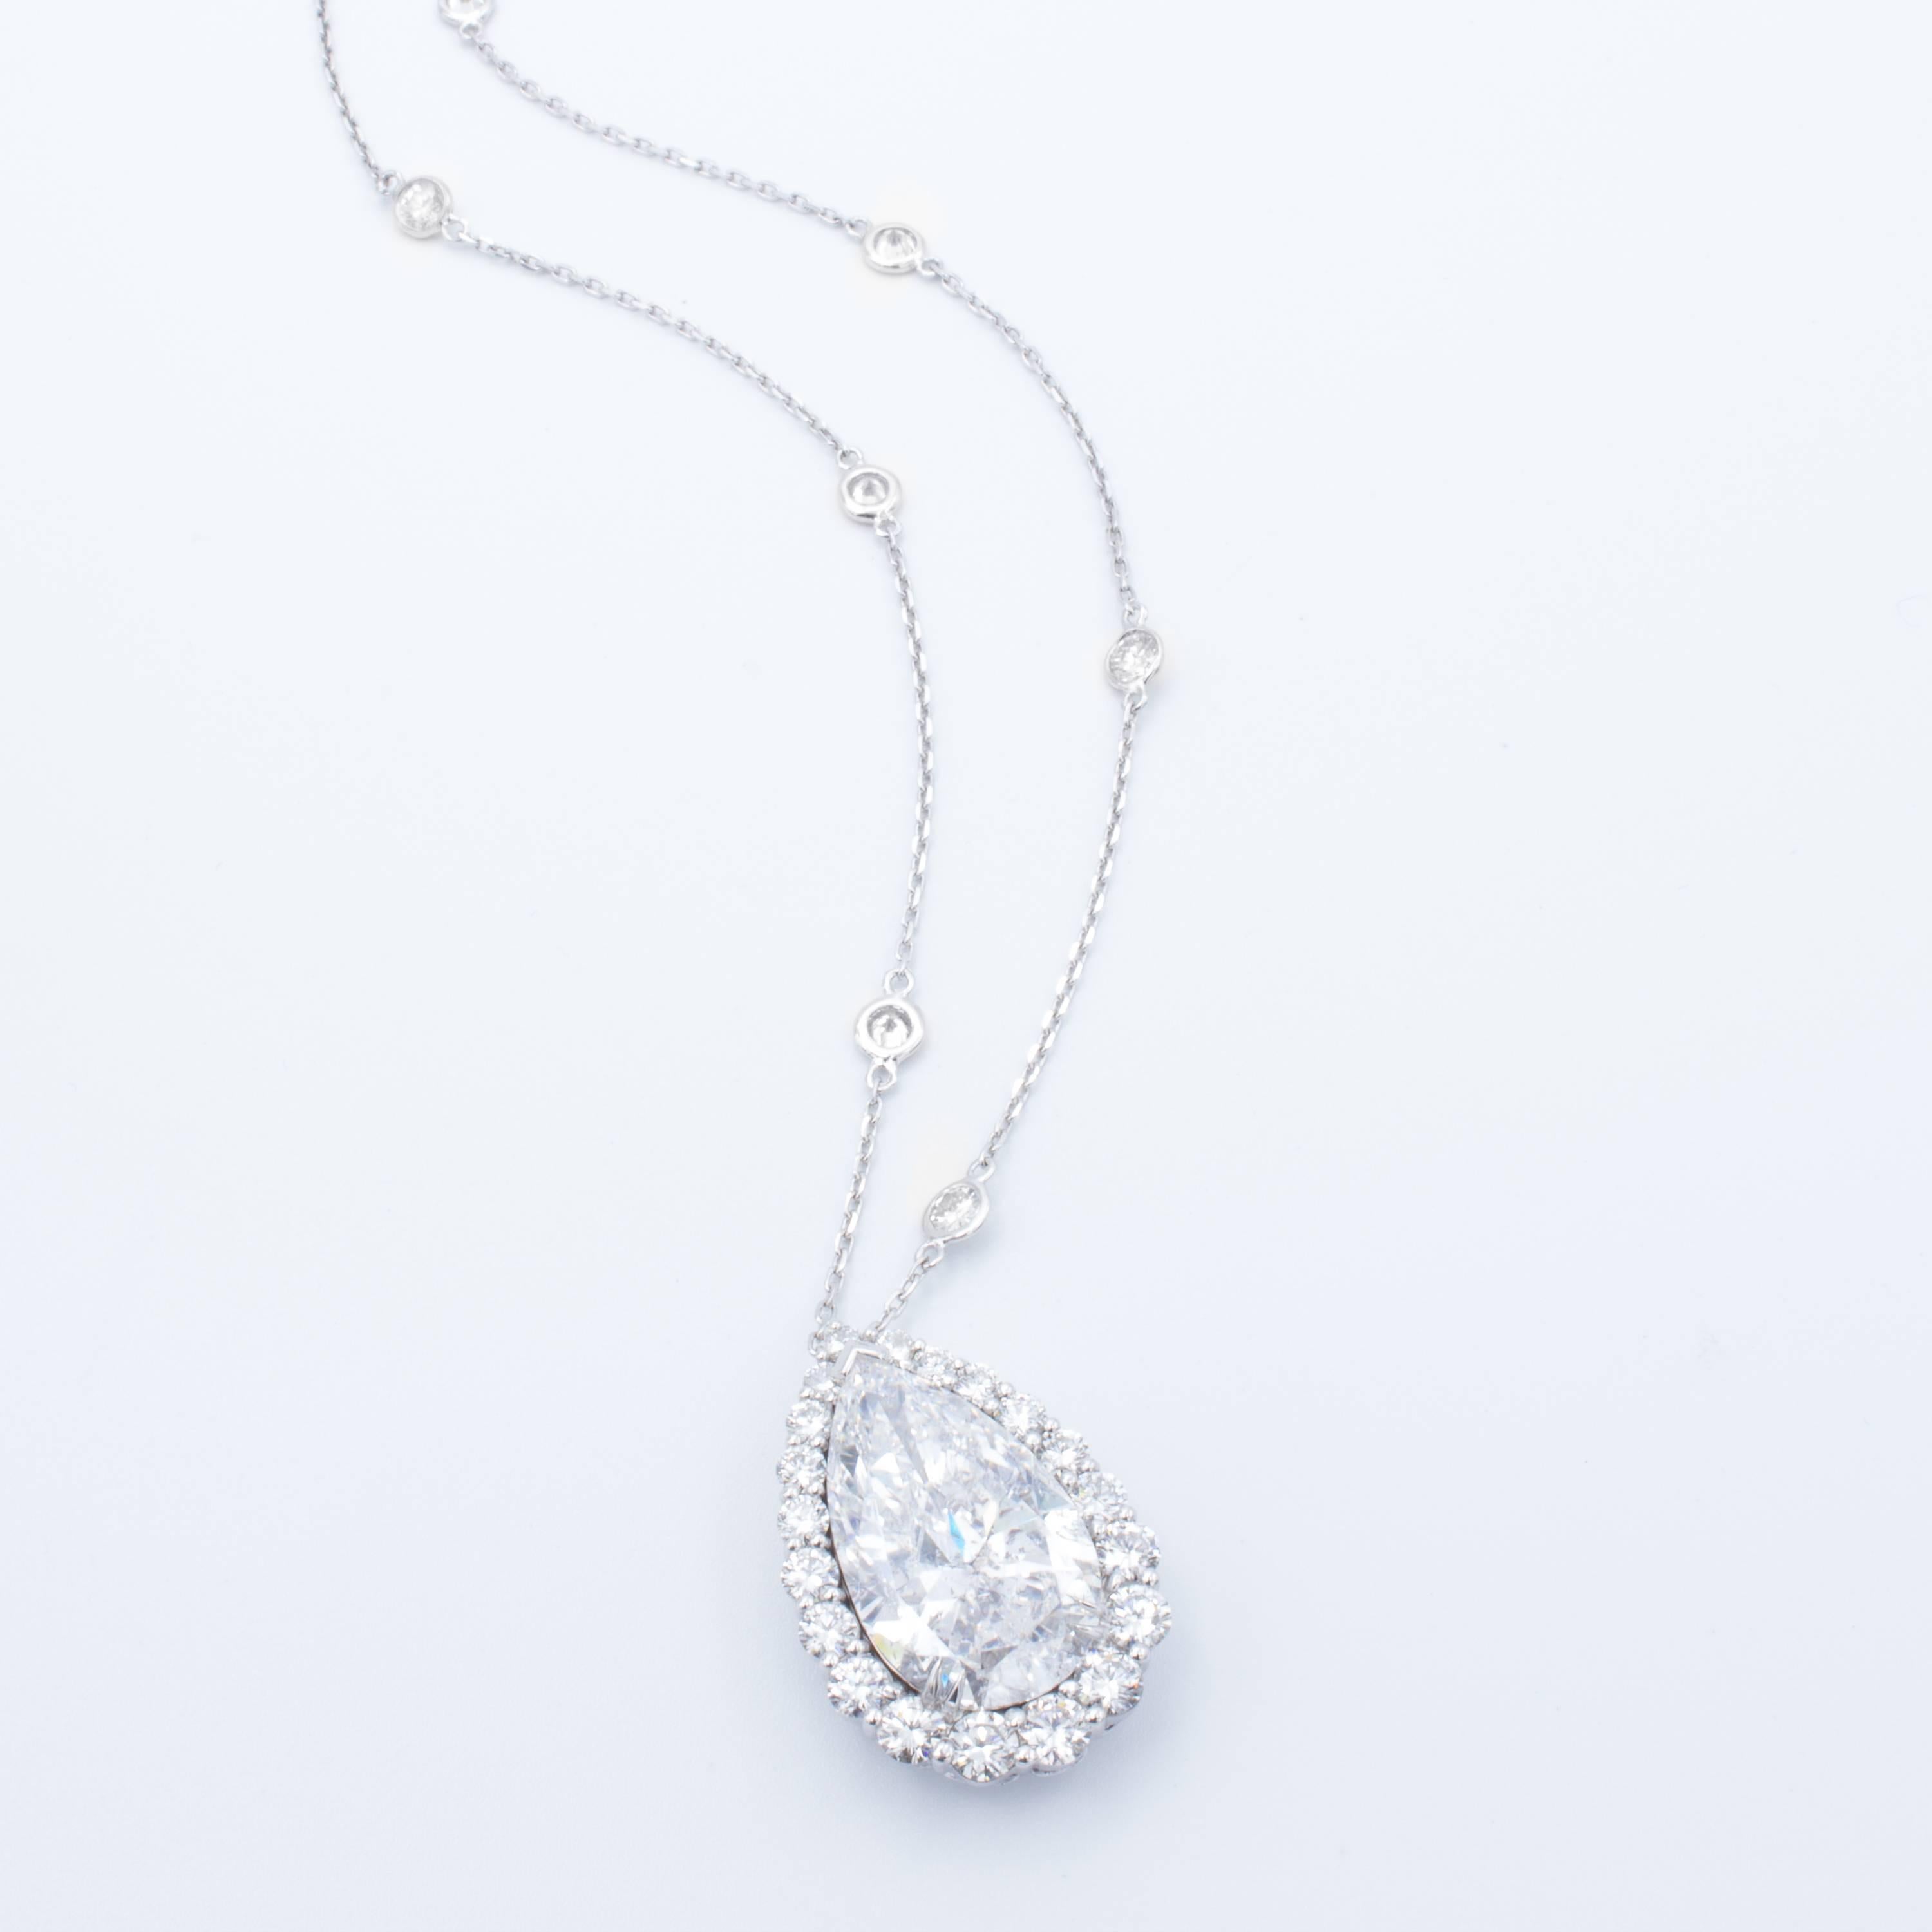 David Rosenberg 12 Carat Pear Shape D/I1 GIA Certified Diamond Pendant Necklace 1